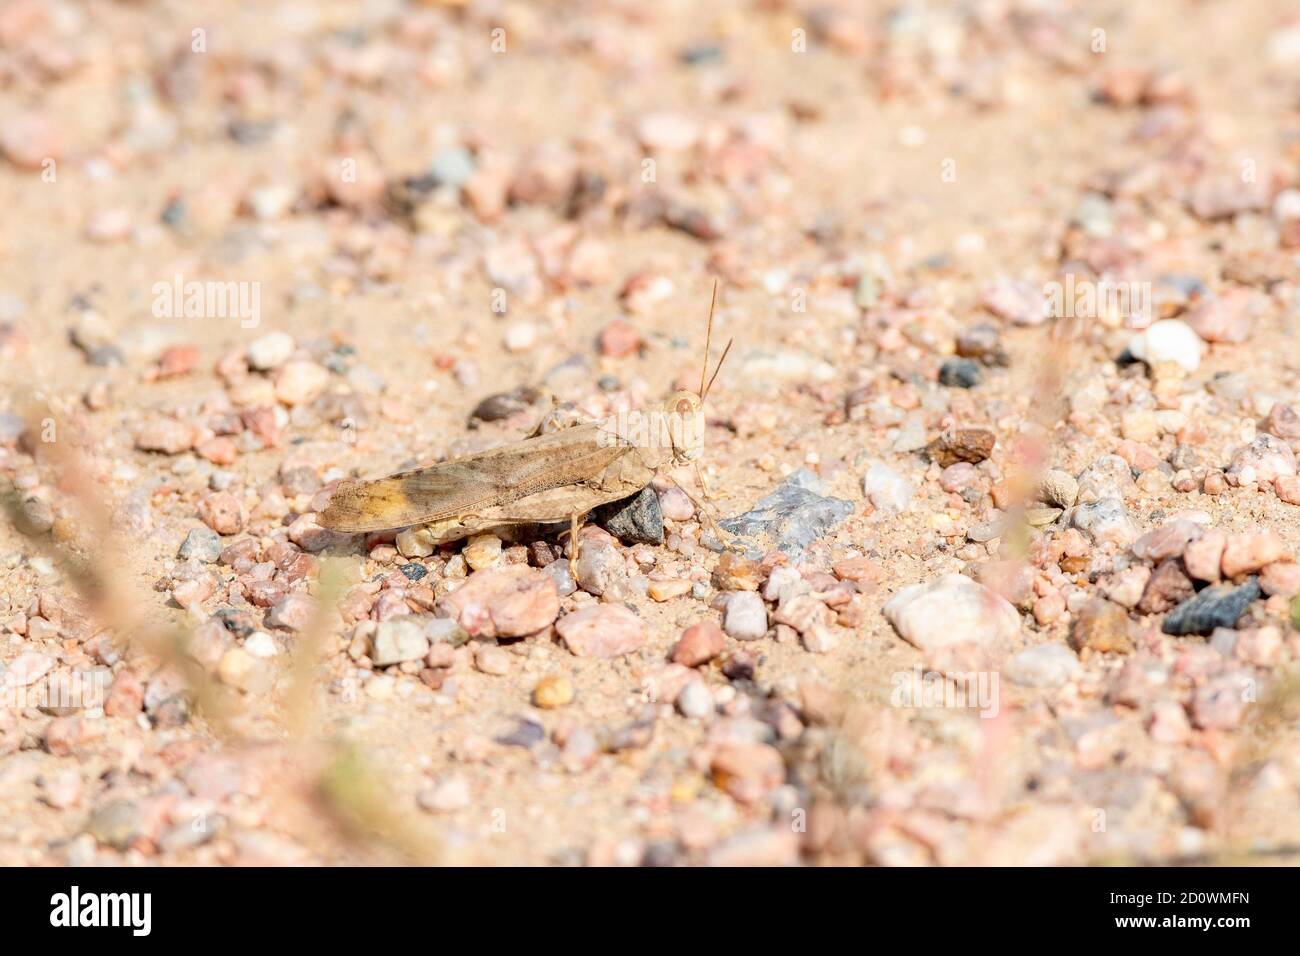 Carolina Grasshopper (Dissosteira carolina) on the Ground in Colorado Stock Photo